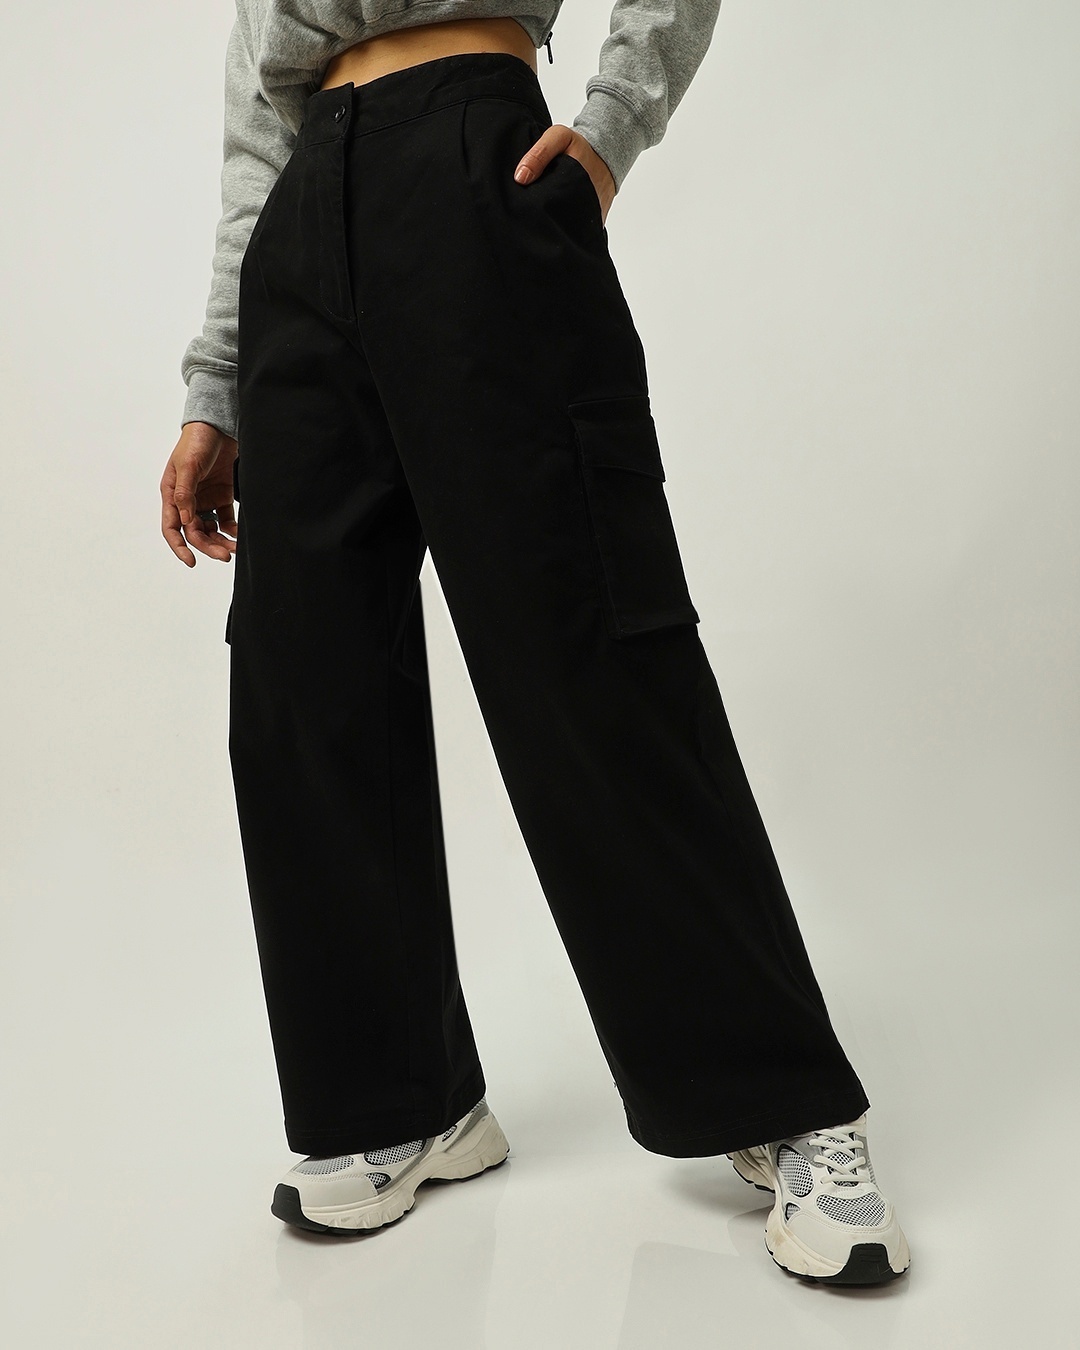 Black Cargo Pants for Women | Wide Leg Trousers | Plus Size